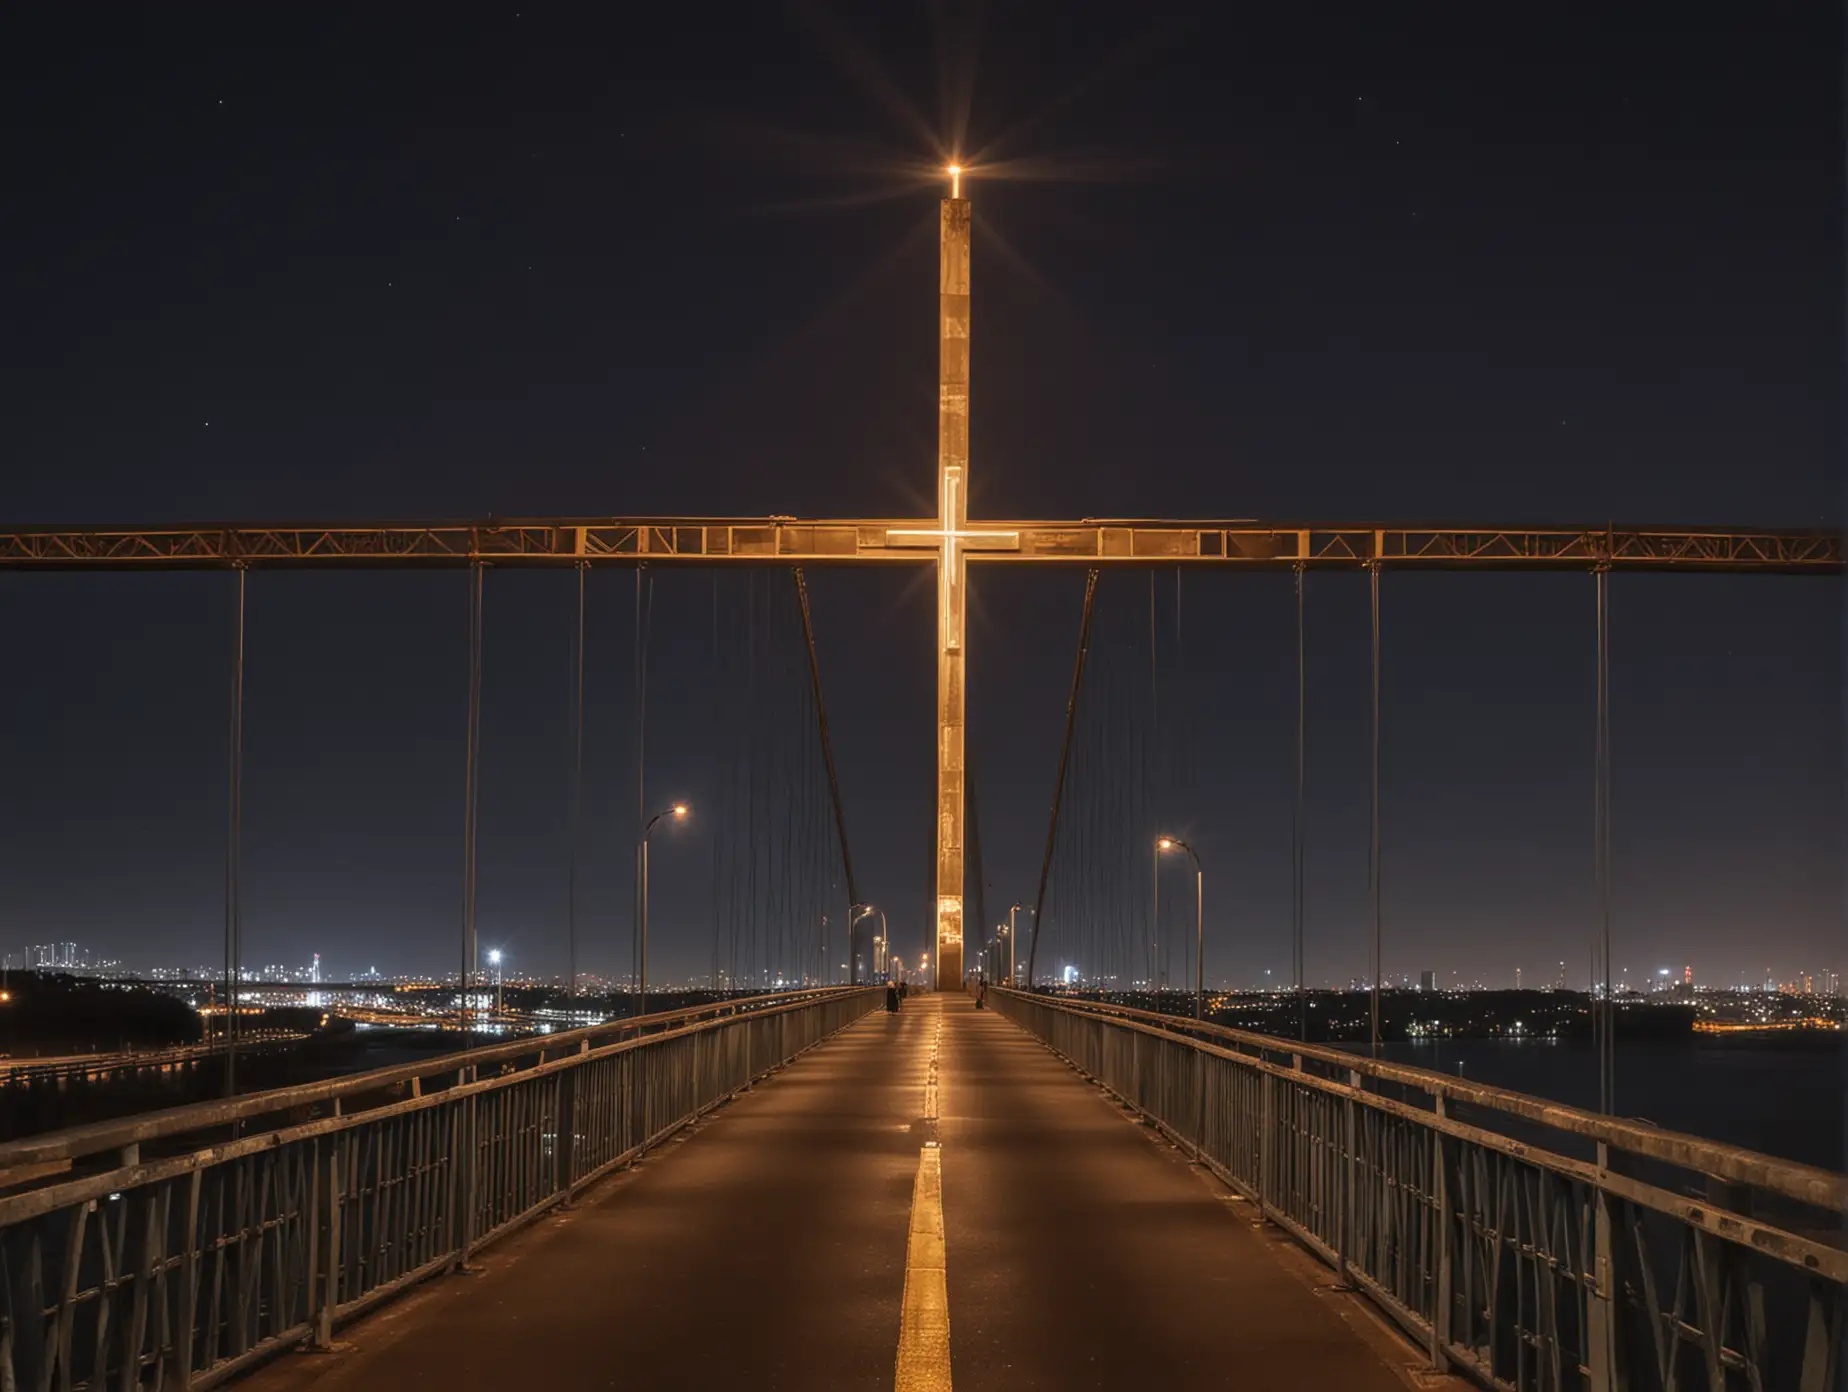 Big cross light on the bridge in the night